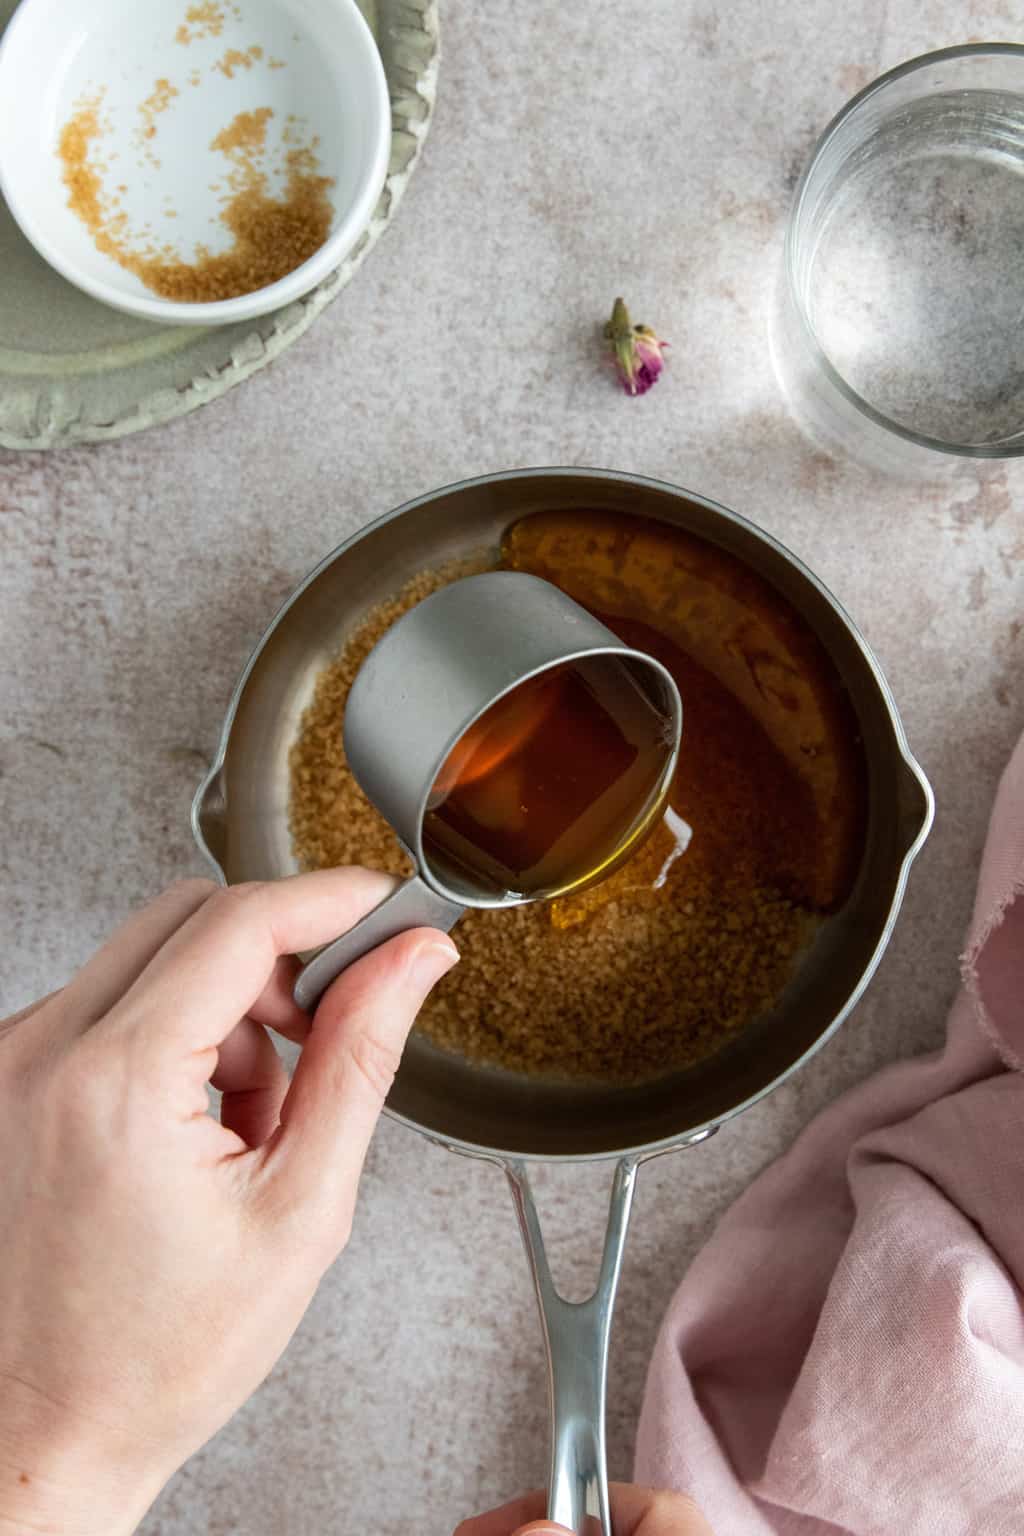 Melting sugar for DIY Tea Bombs